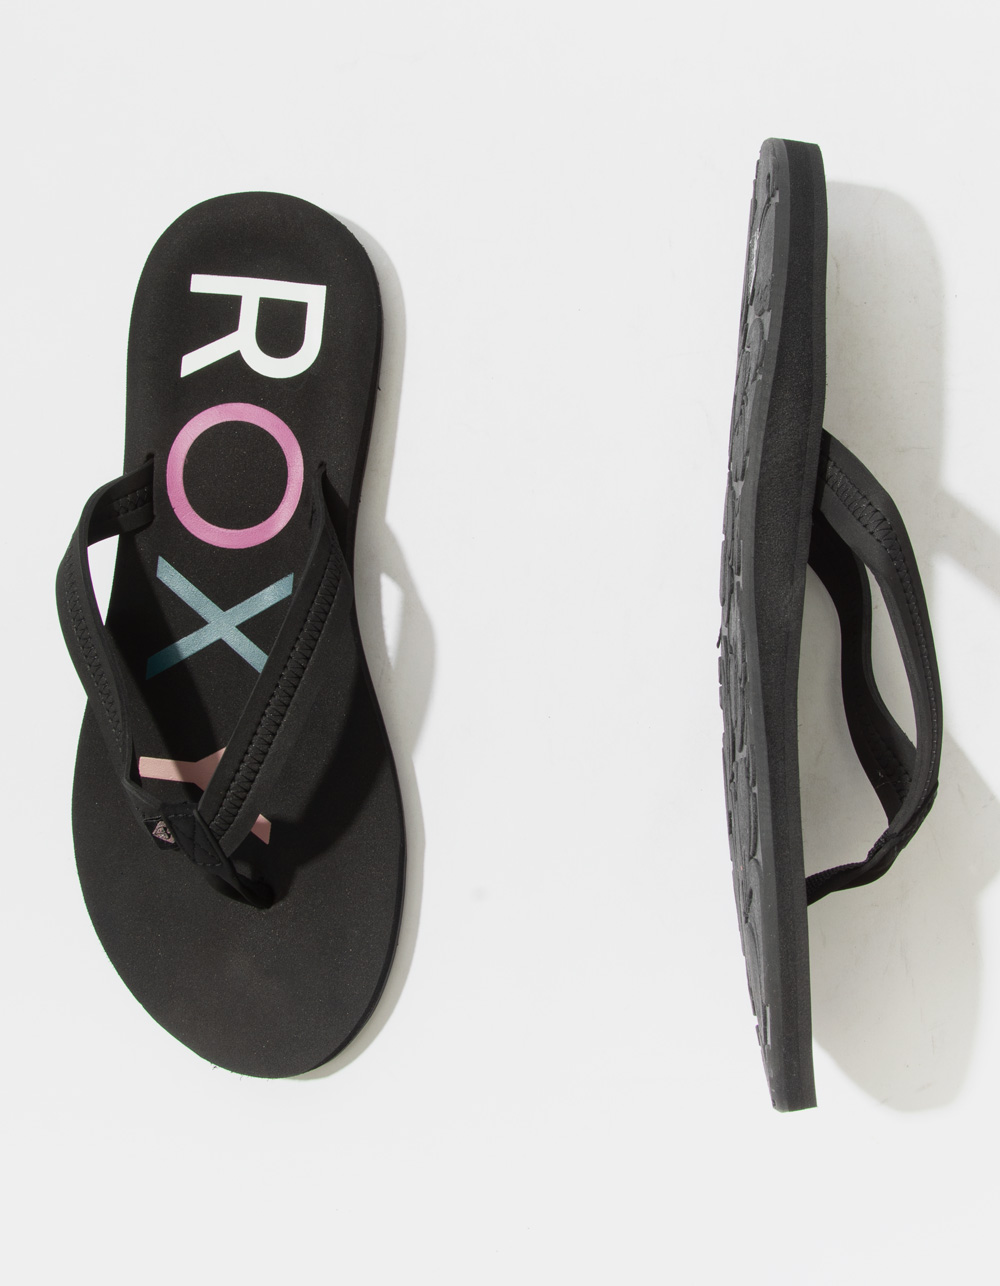 Roxy Womens Flip Flop Sandals Size 10 Black White Palm Design Dual Layer  Sole